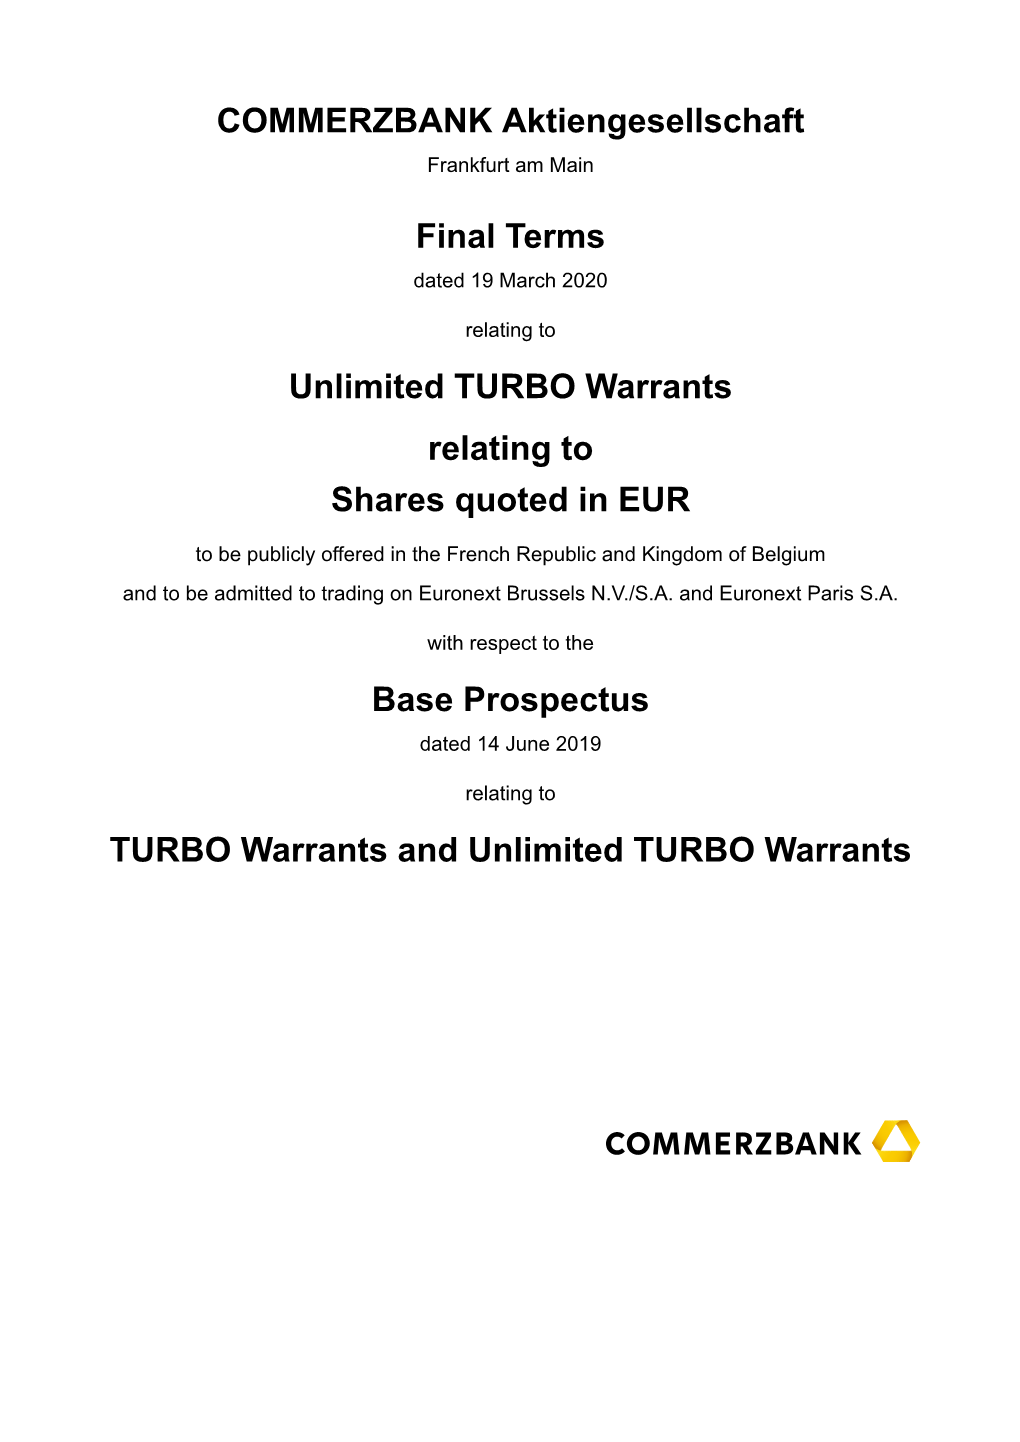 COMMERZBANK Aktiengesellschaft Final Terms Unlimited TURBO